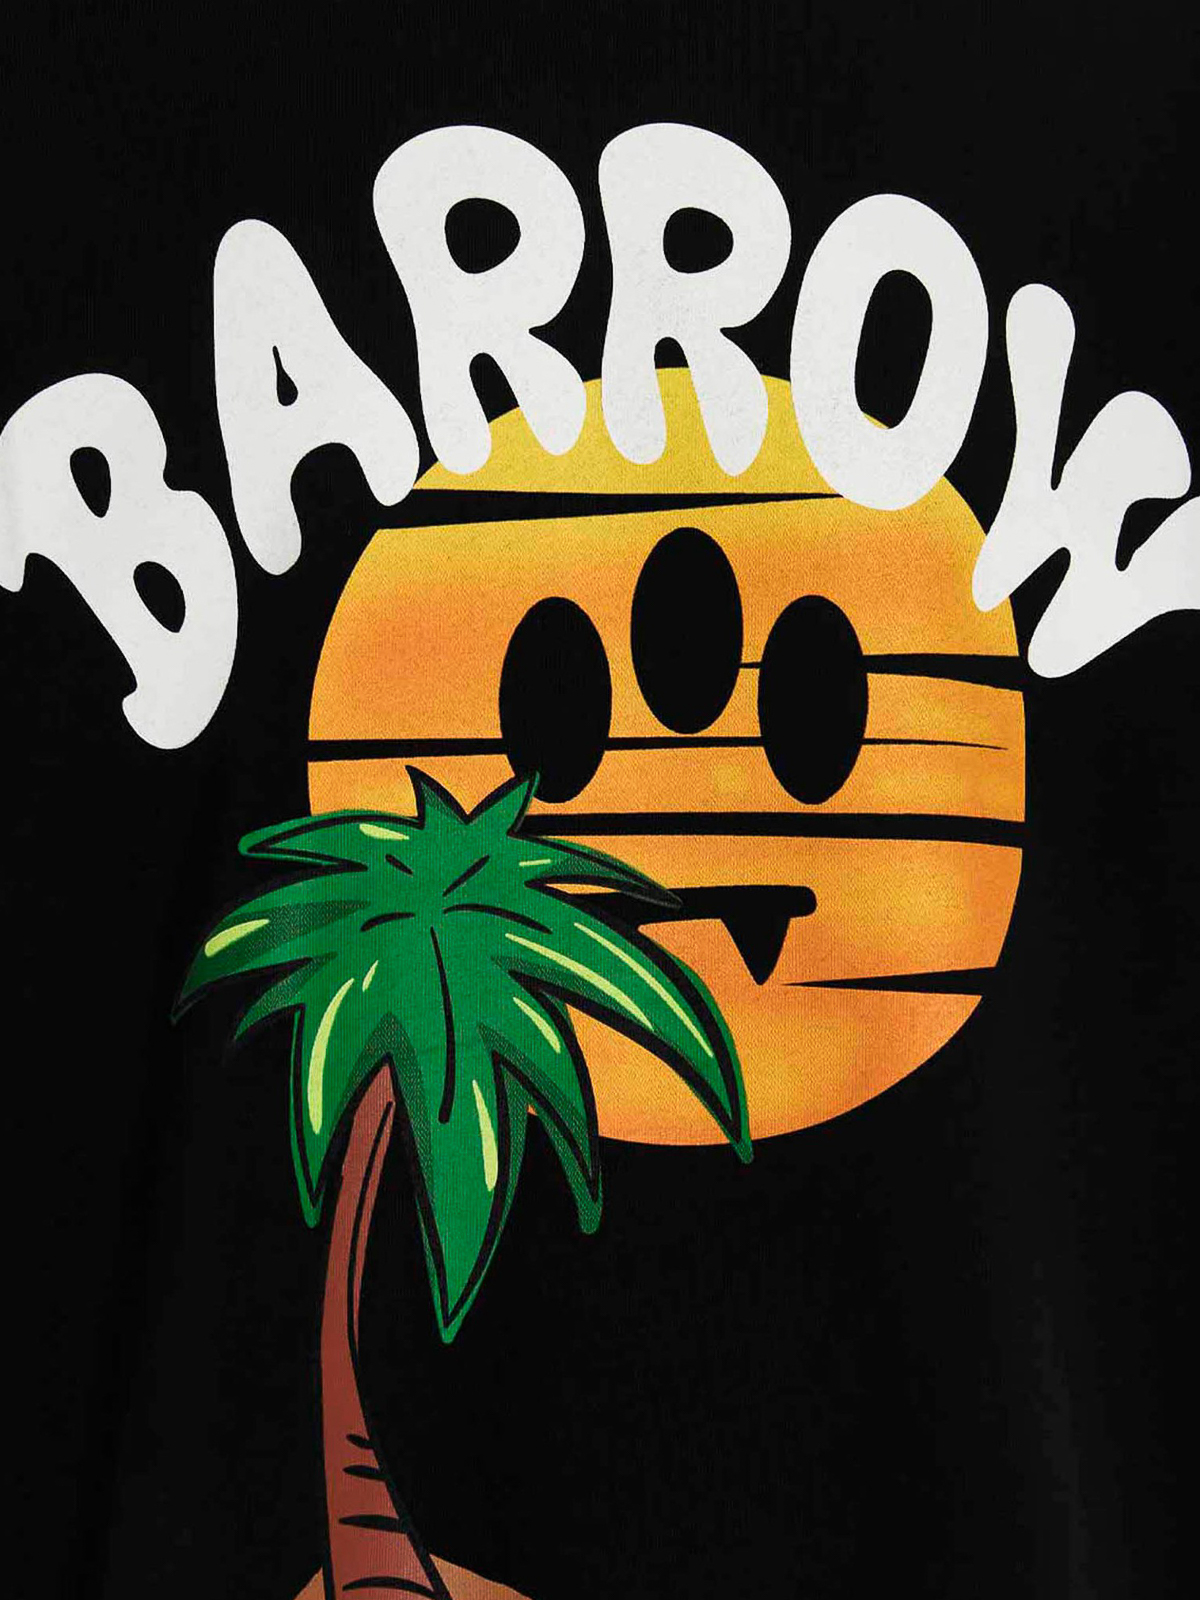 Shop Barrow Logo Print T-shirt In Black